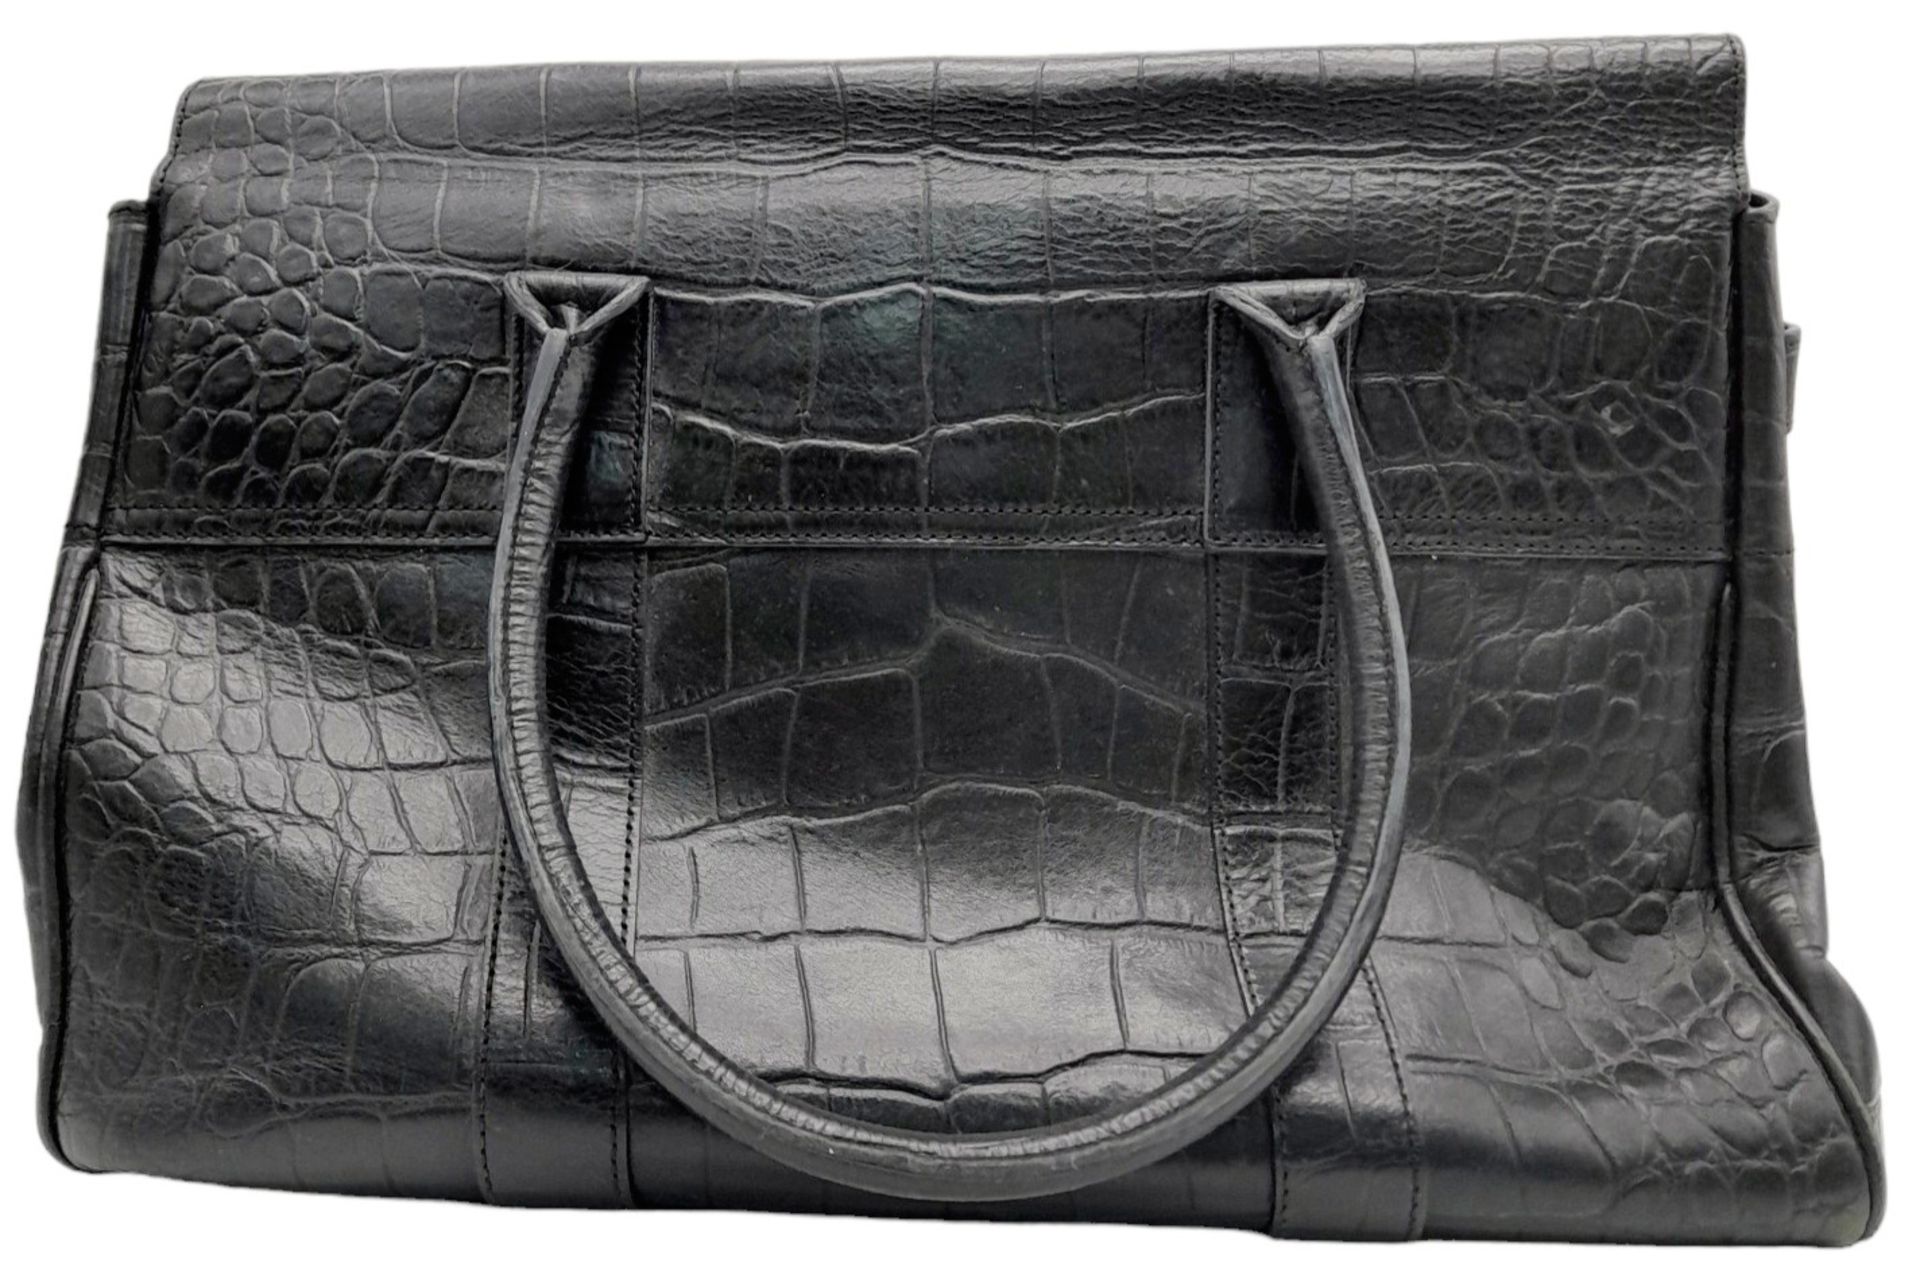 A Mulberry Bayswater Handbag. Black Croc Embossed Leather exterior, gold-tone hardware, a clochette, - Bild 4 aus 7